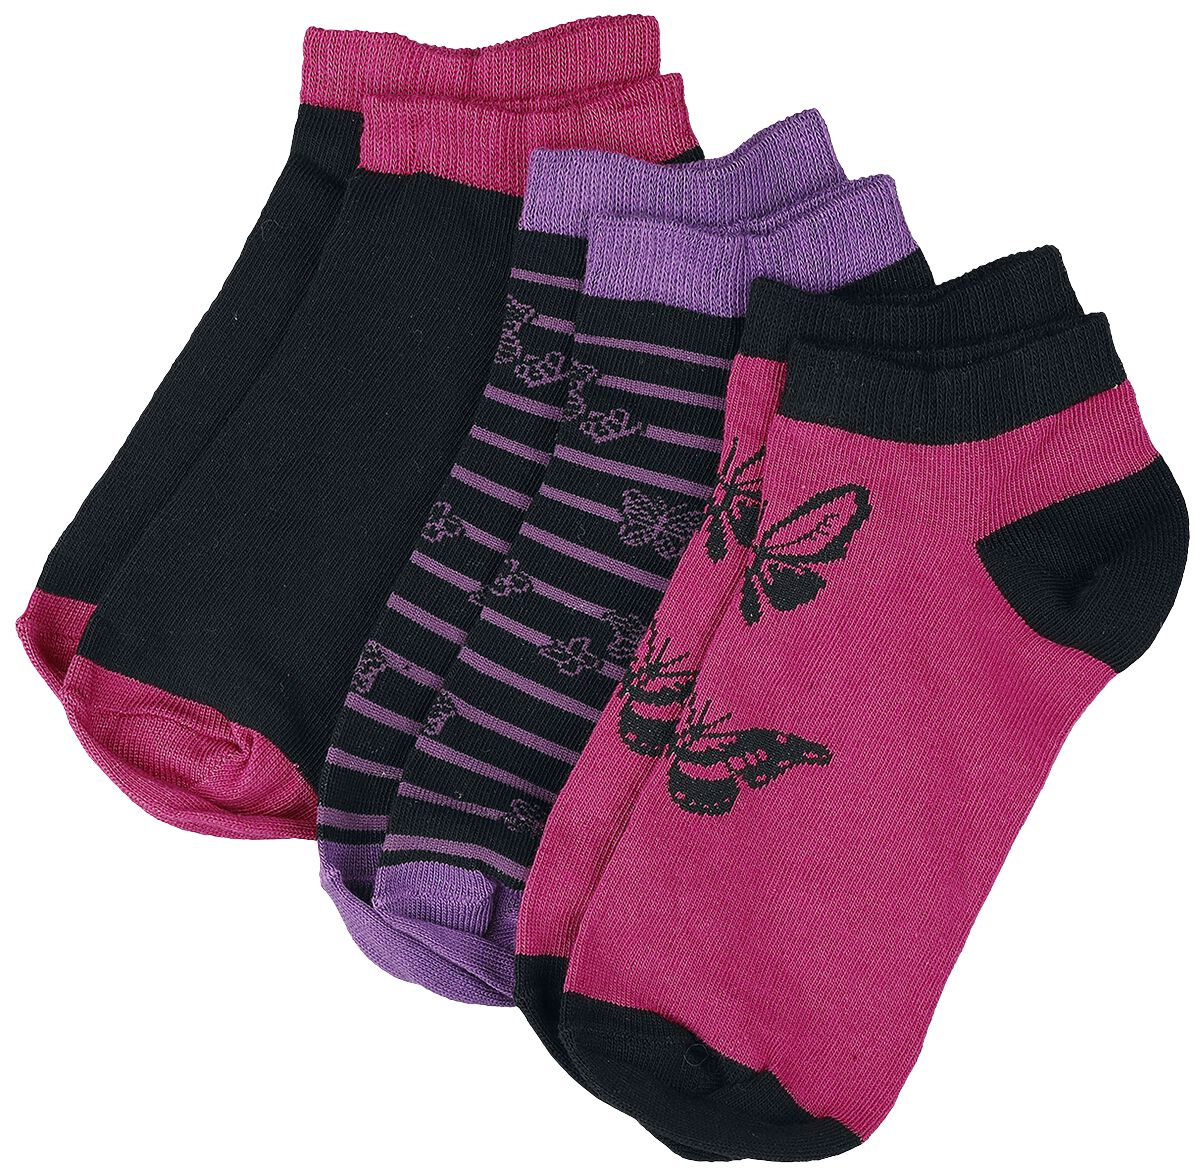 Full Volume by EMP Socken - Dreierpack Socken mit Butterfly - EU35-38 bis EU39-42 - Größe EU 35-38 - schwarz